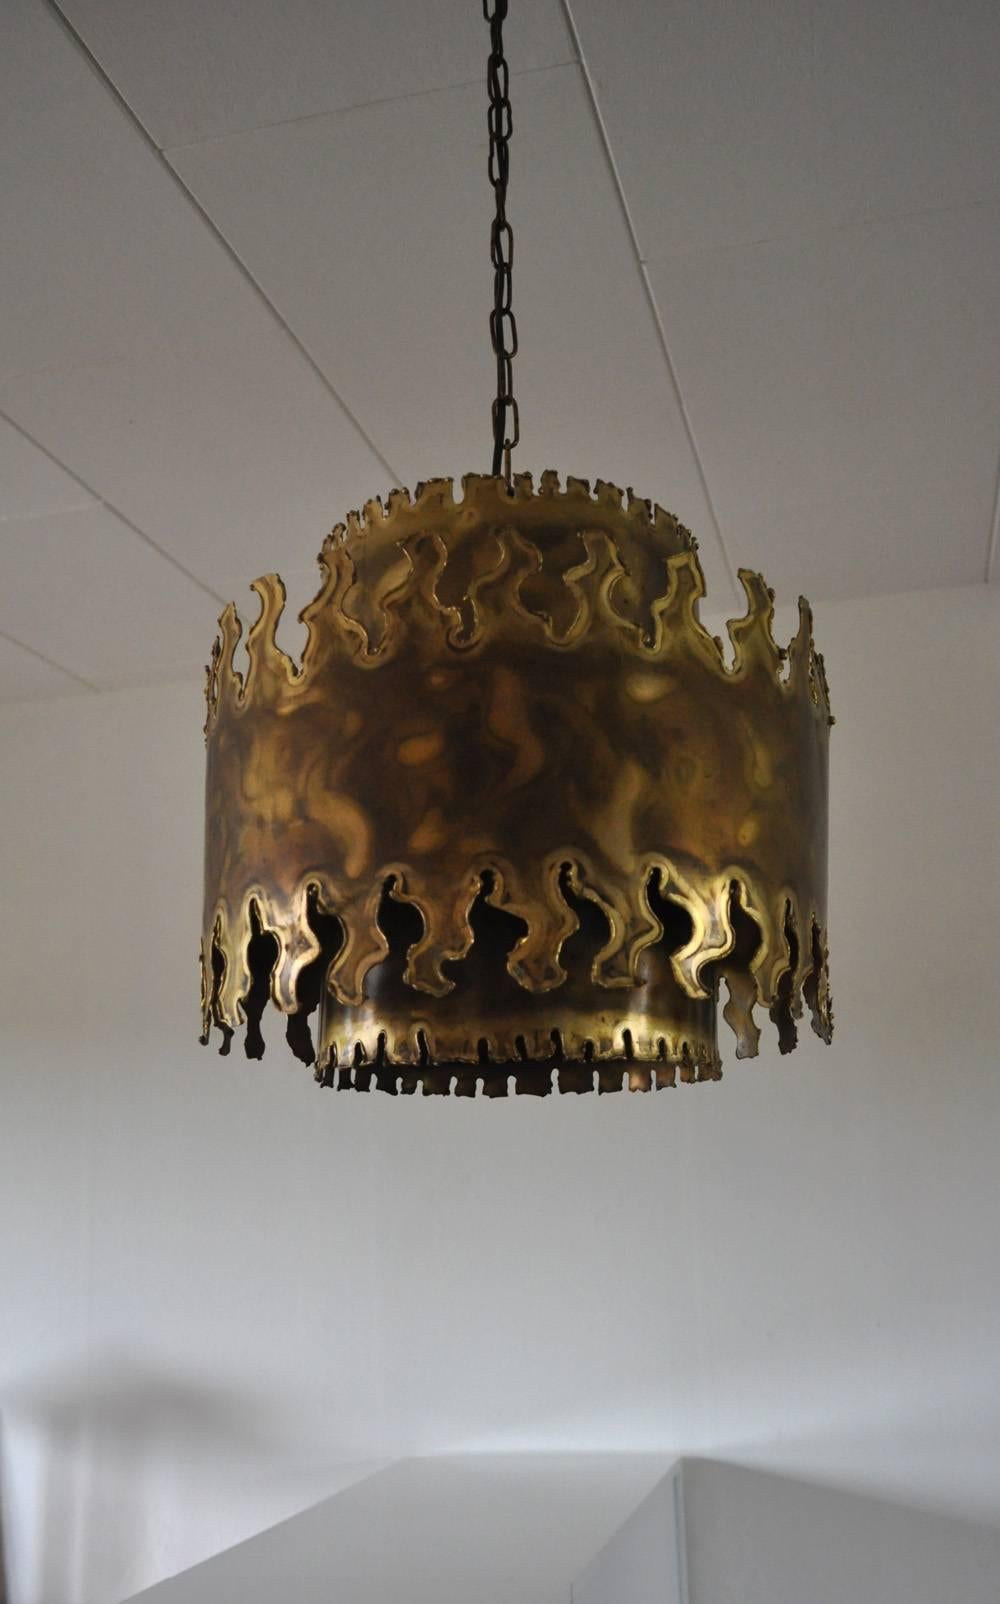 Scandinavian Modern Large Ceiling Lamp Designed by Svend Aage Holm Sørensen in the 1960s in Denmark